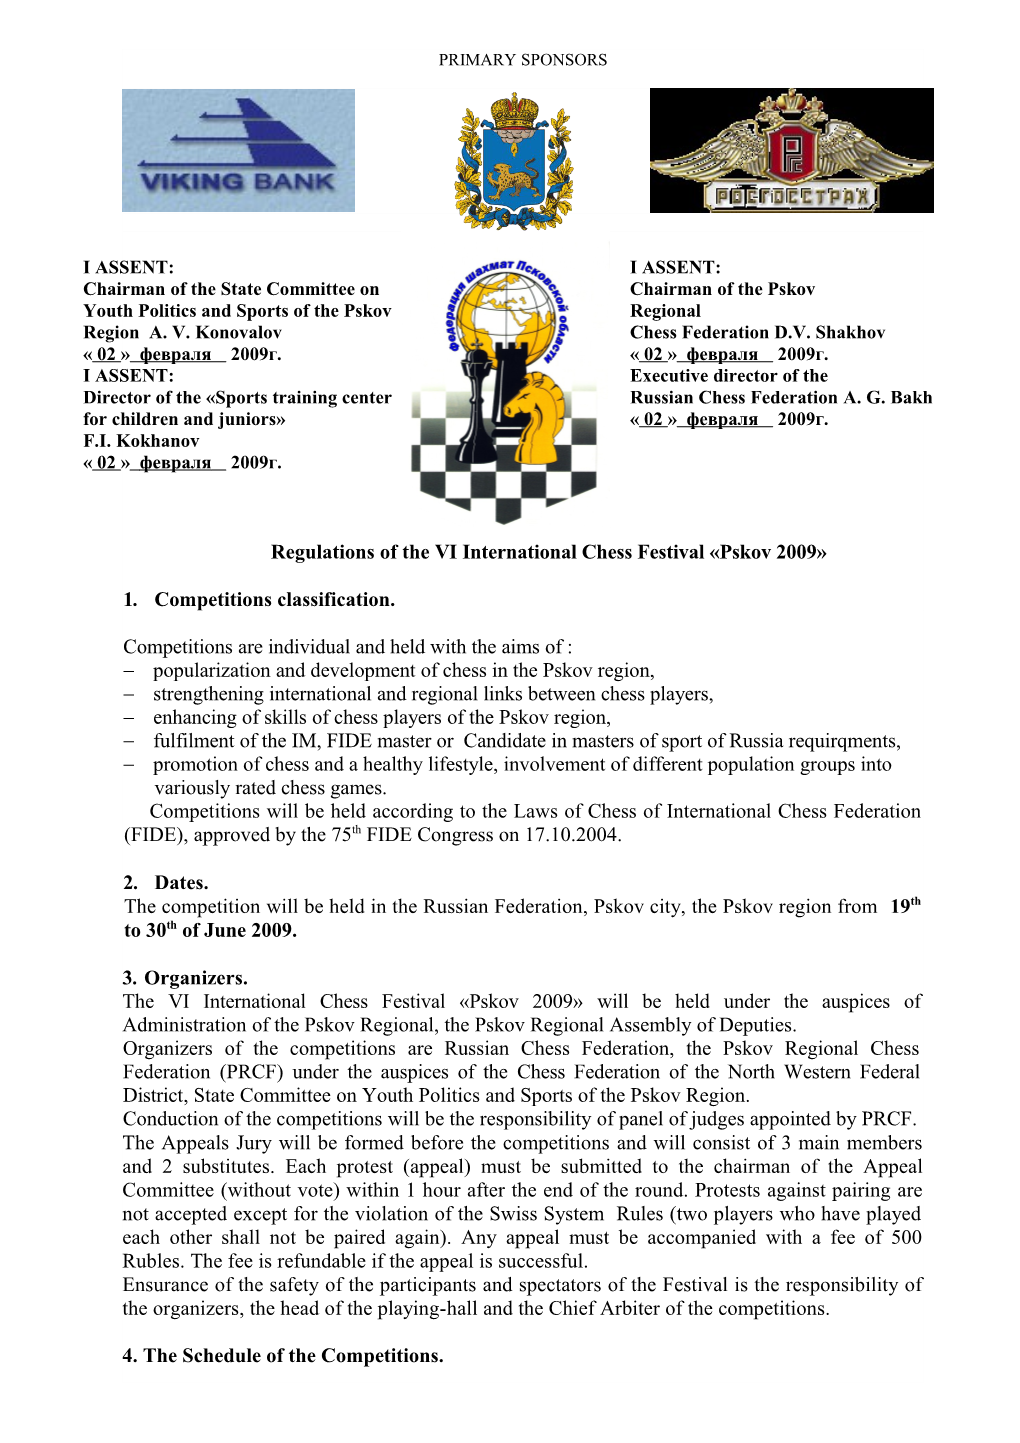 Regulations of the VI International Chess Festival Pskov 2009